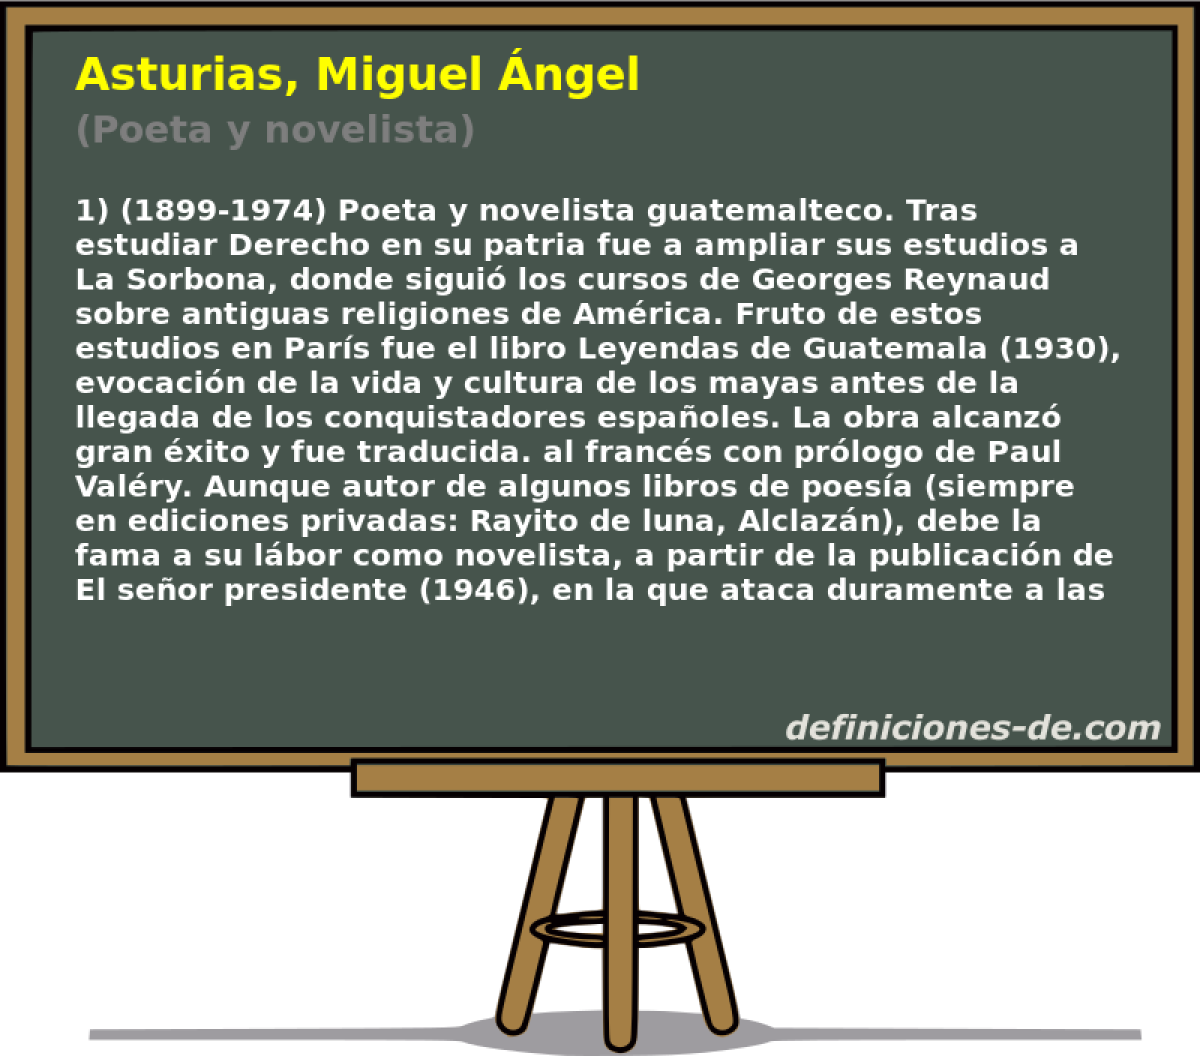 Asturias, Miguel ngel (Poeta y novelista)